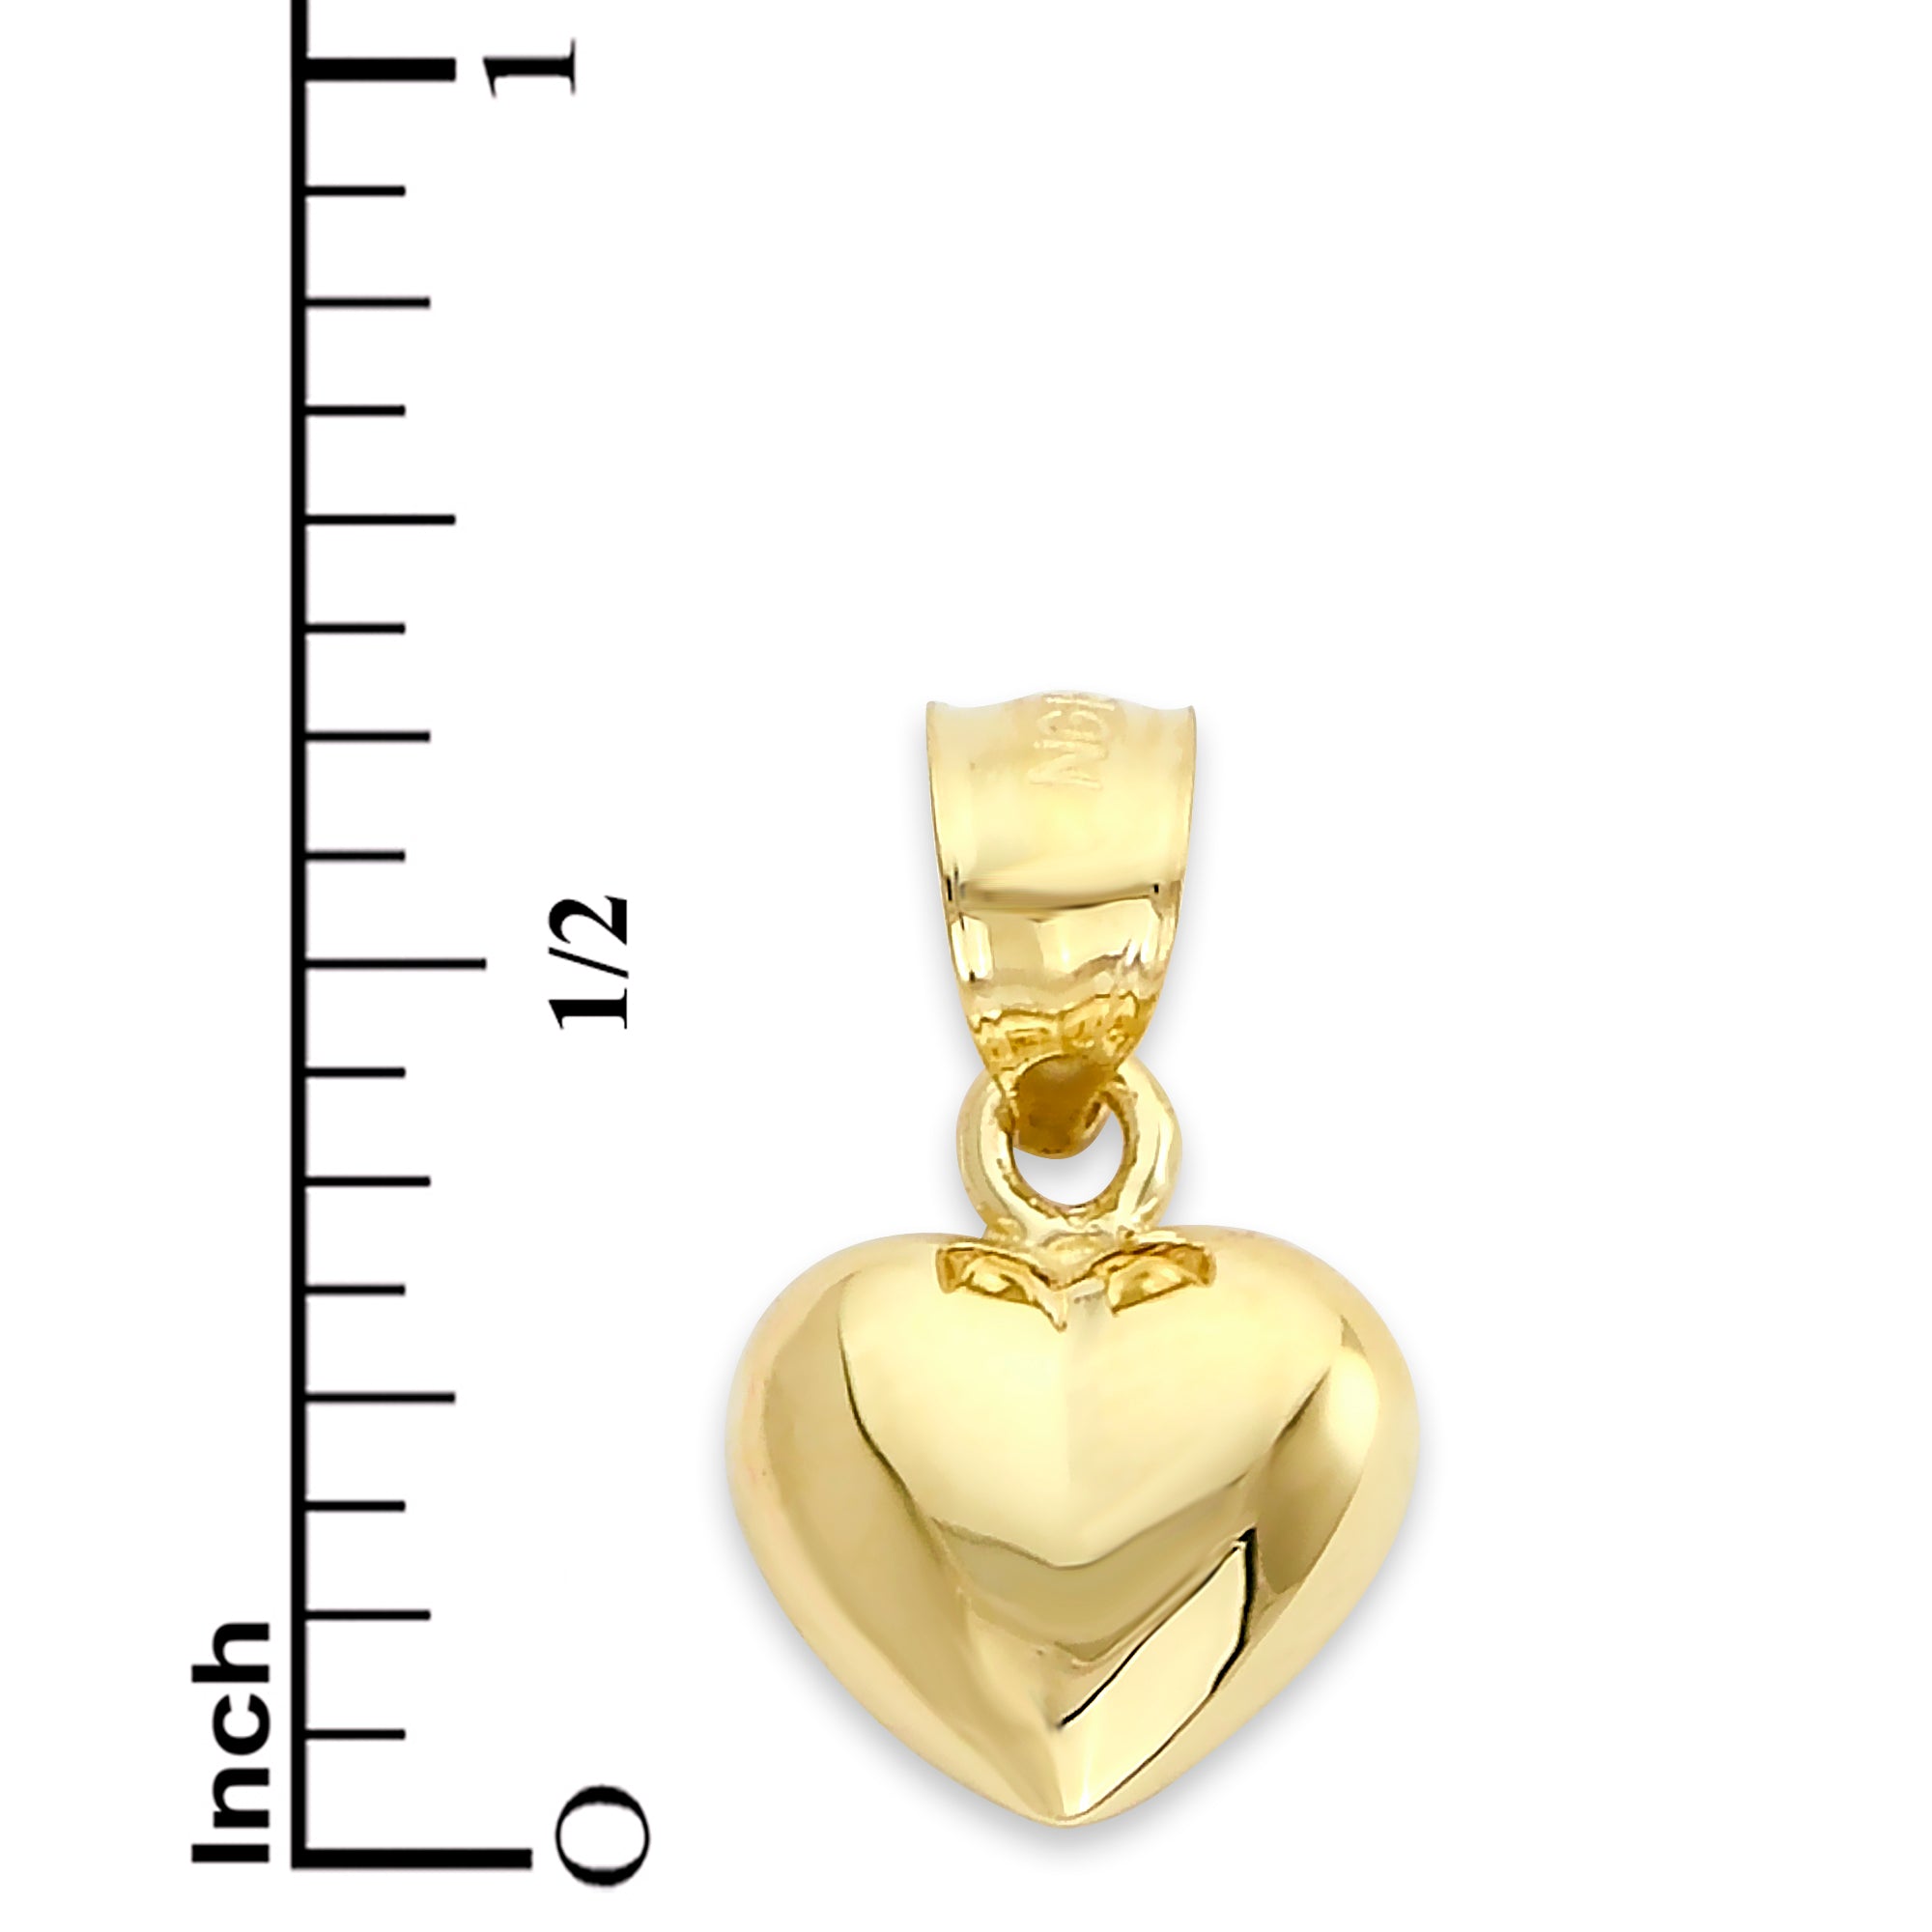 Solid Gold Heart Pendant - 10k or 14k